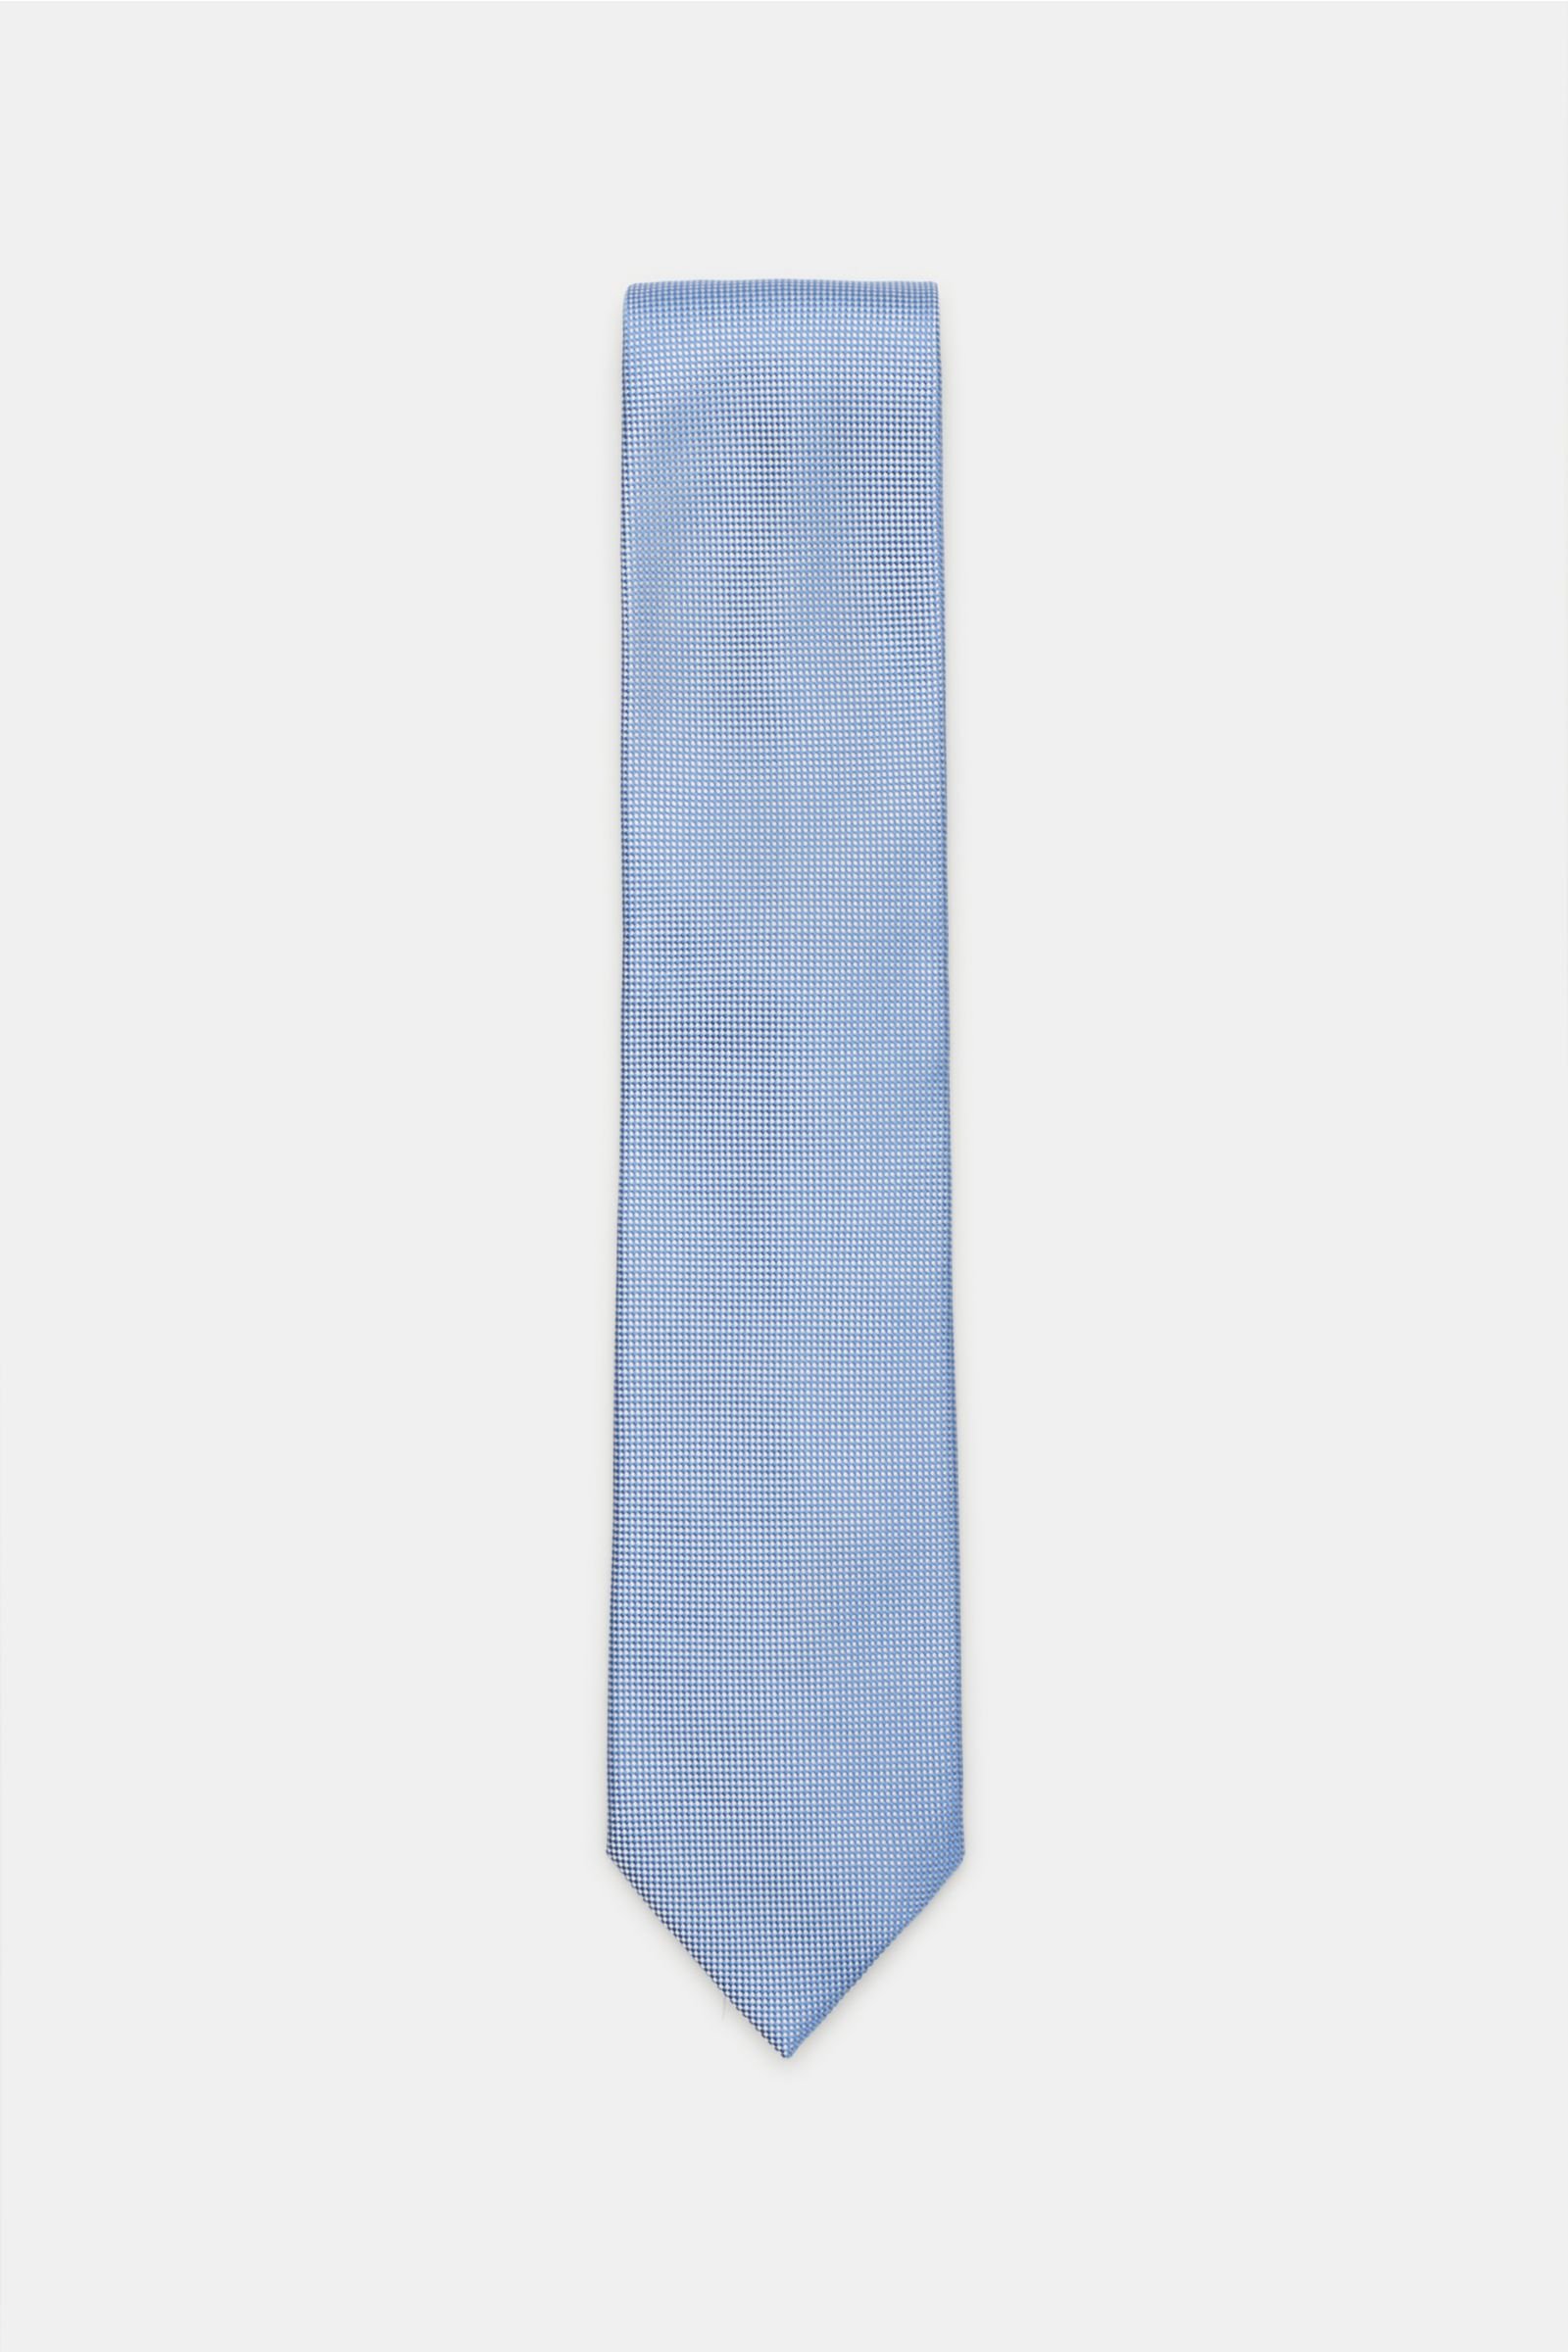 Silk tie light blue patterned